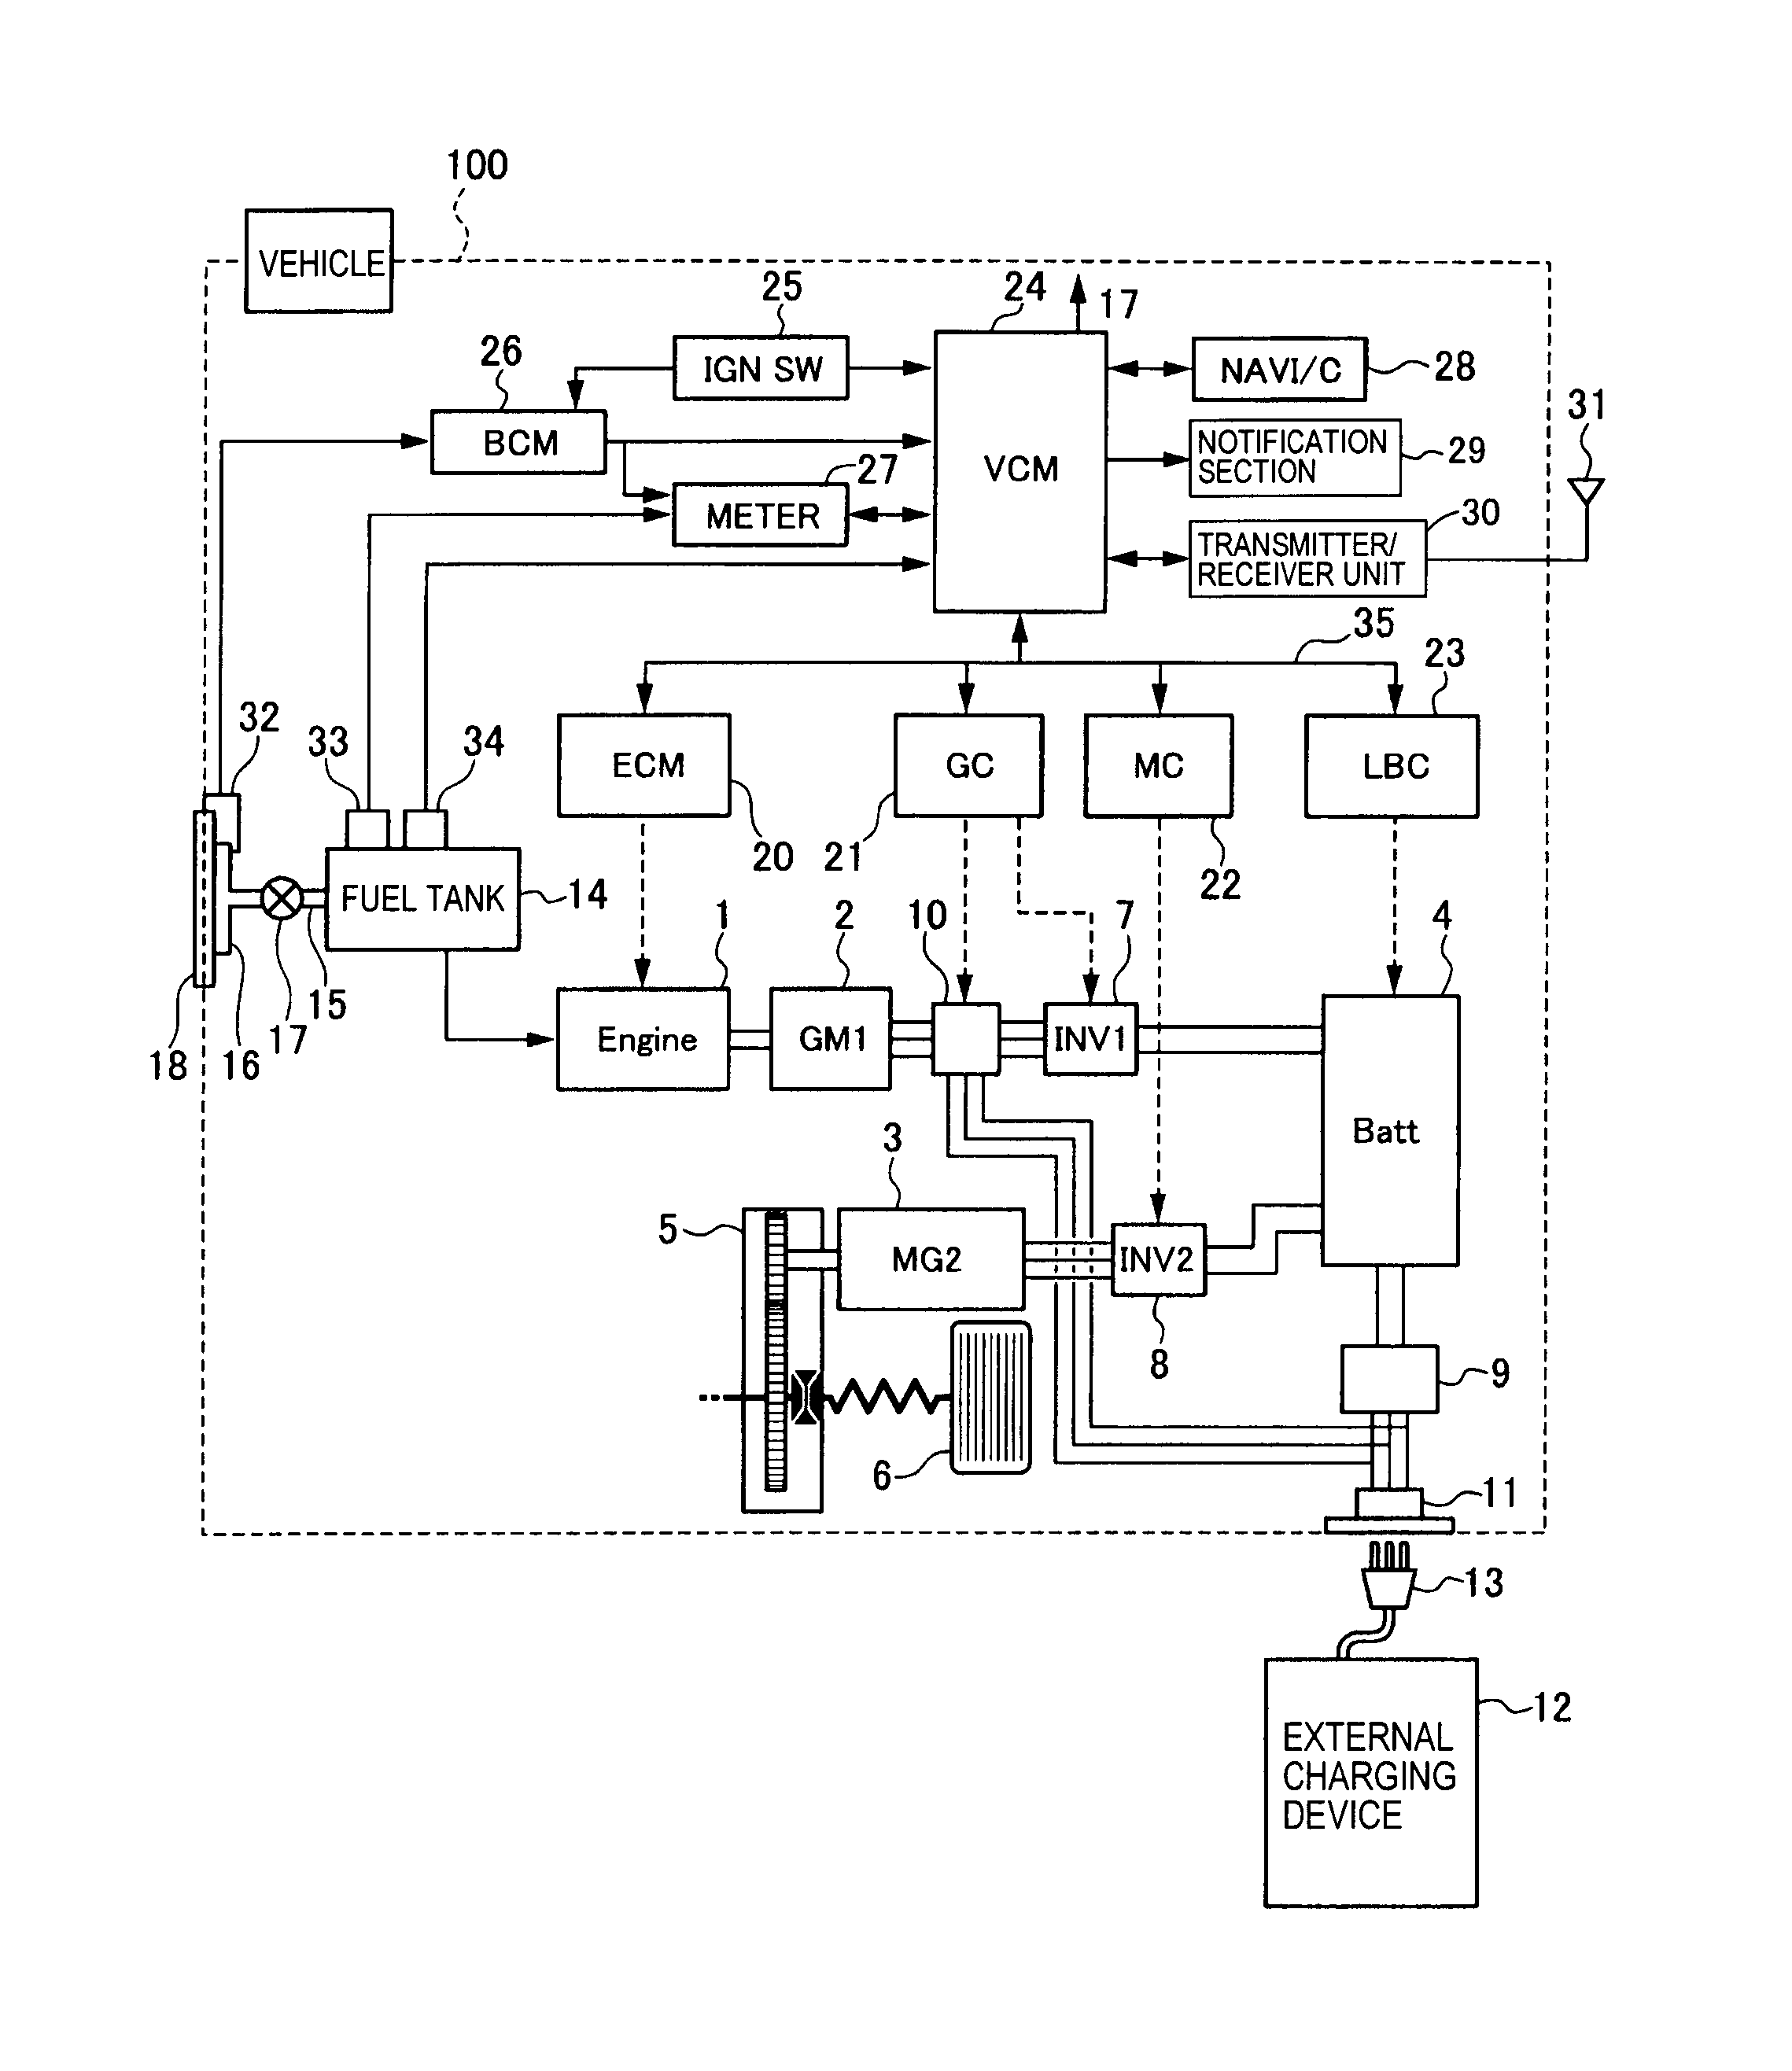 1980 glastron wiring diagram